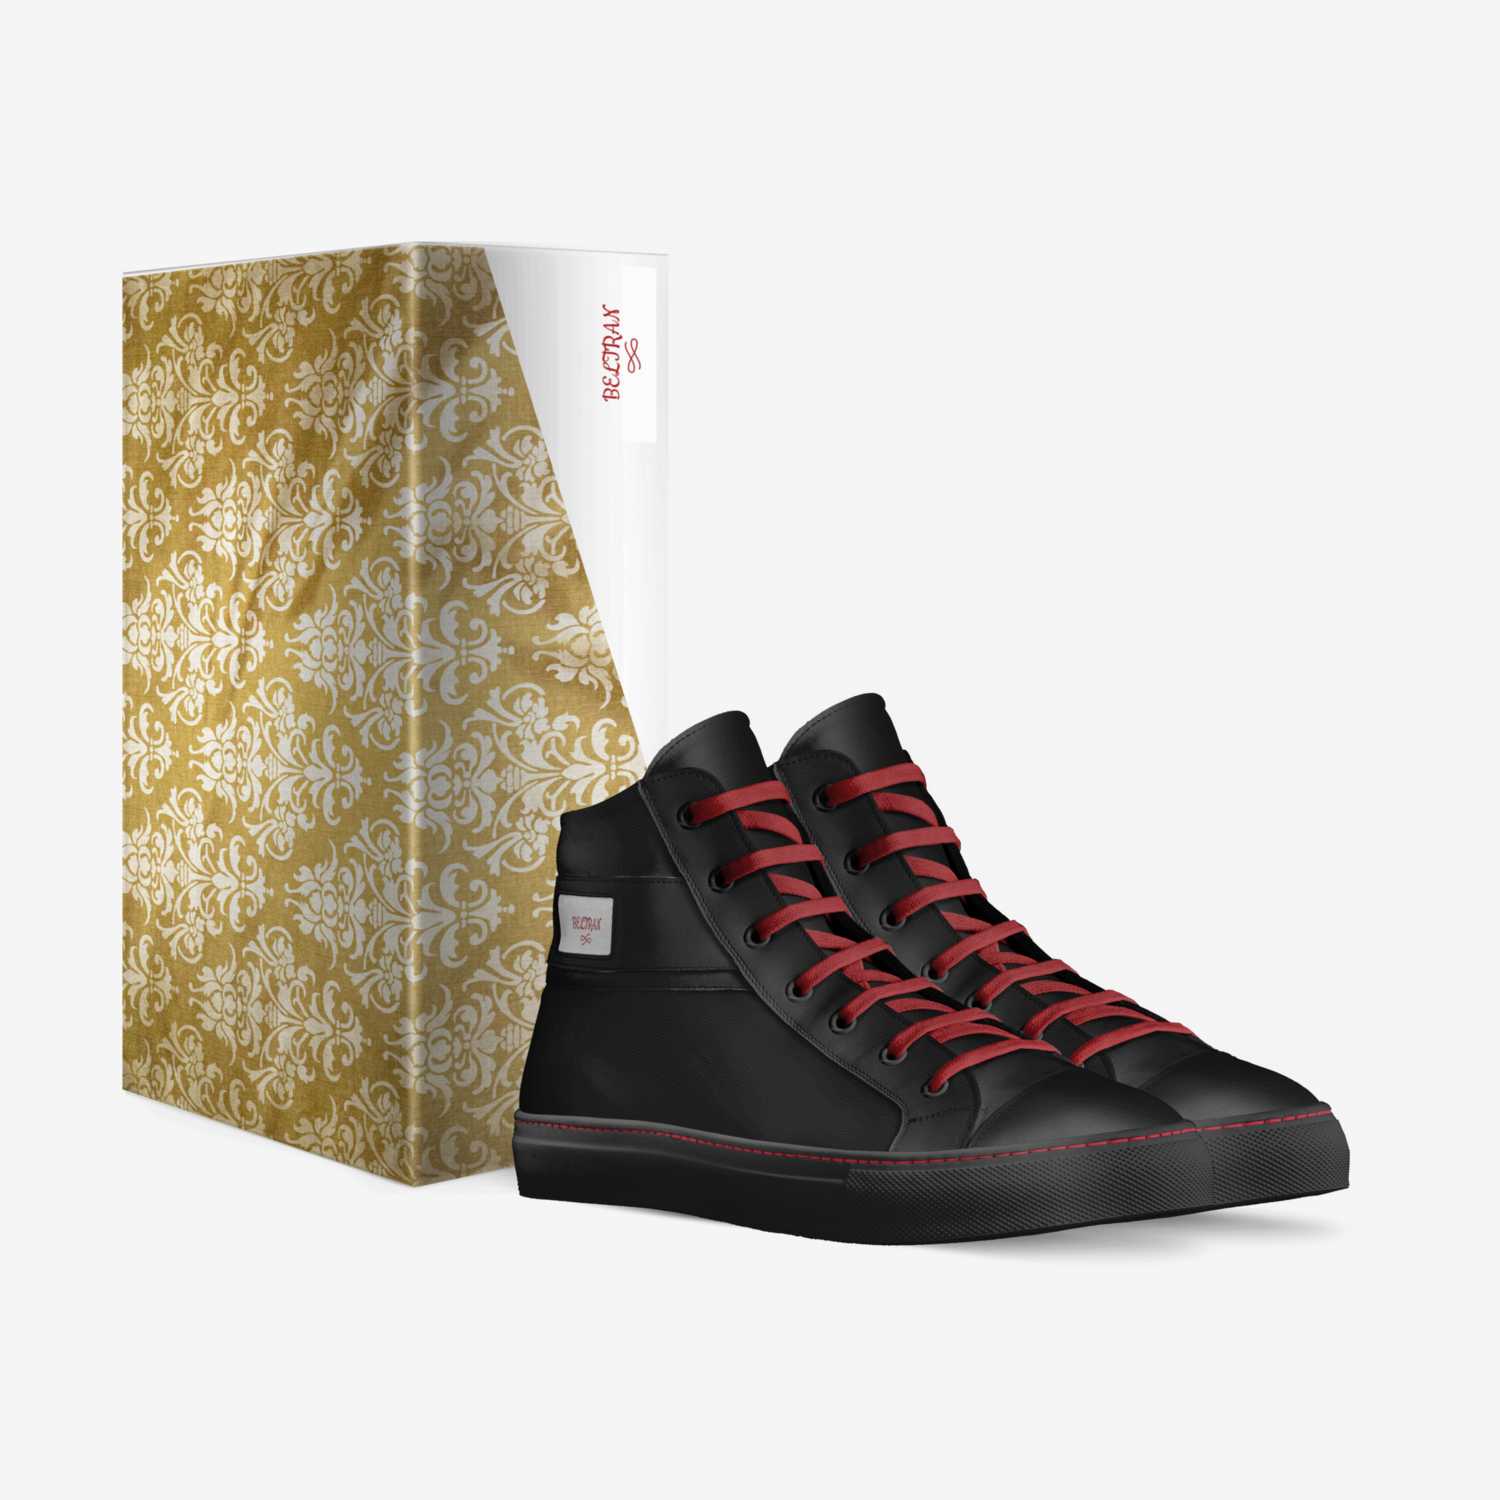 BELTRAN custom made in Italy shoes by Edgar Beltran | Box view